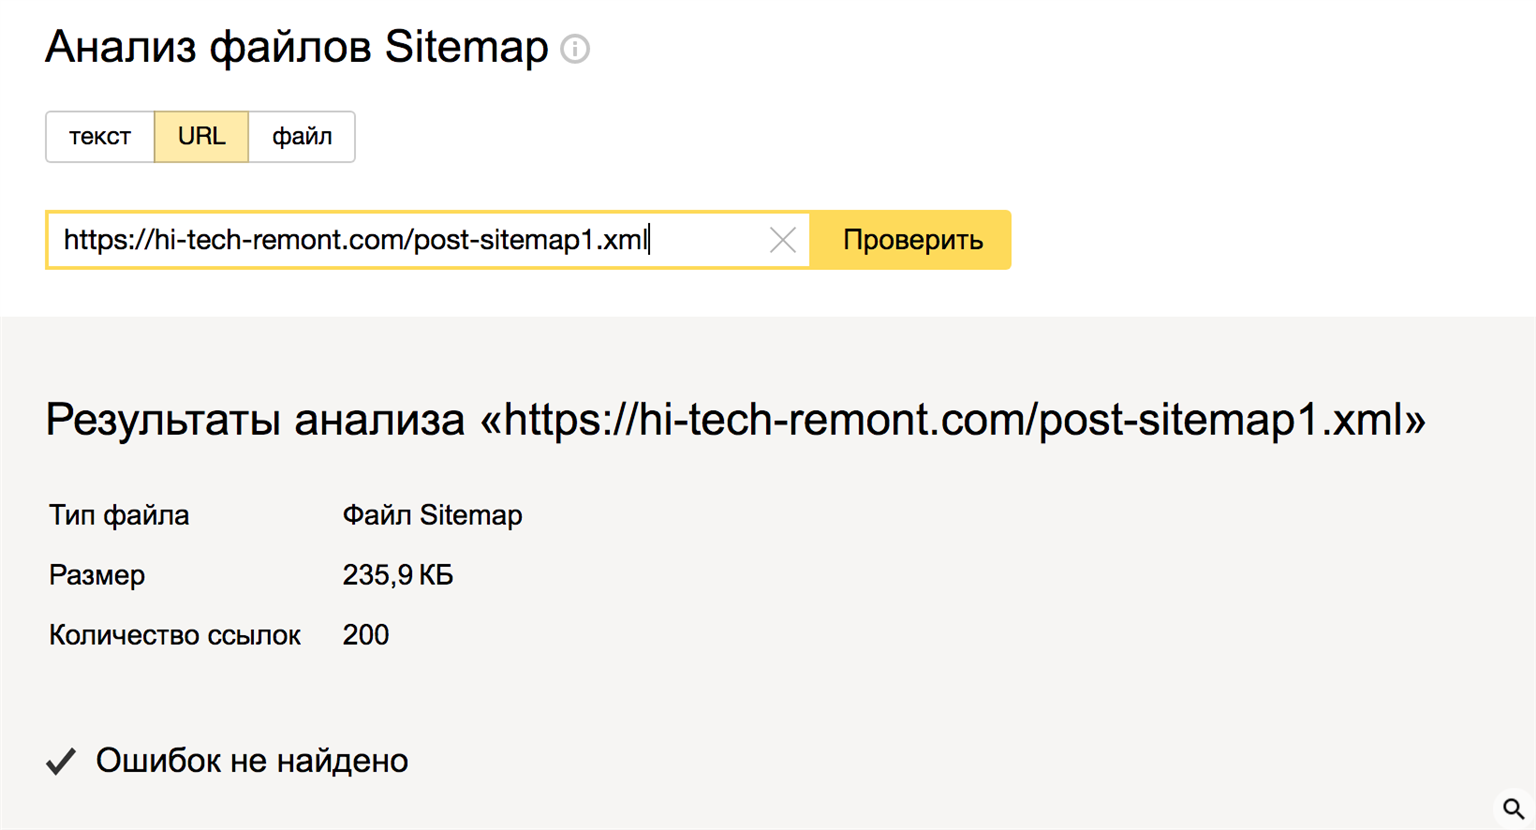 Файл Sitemap